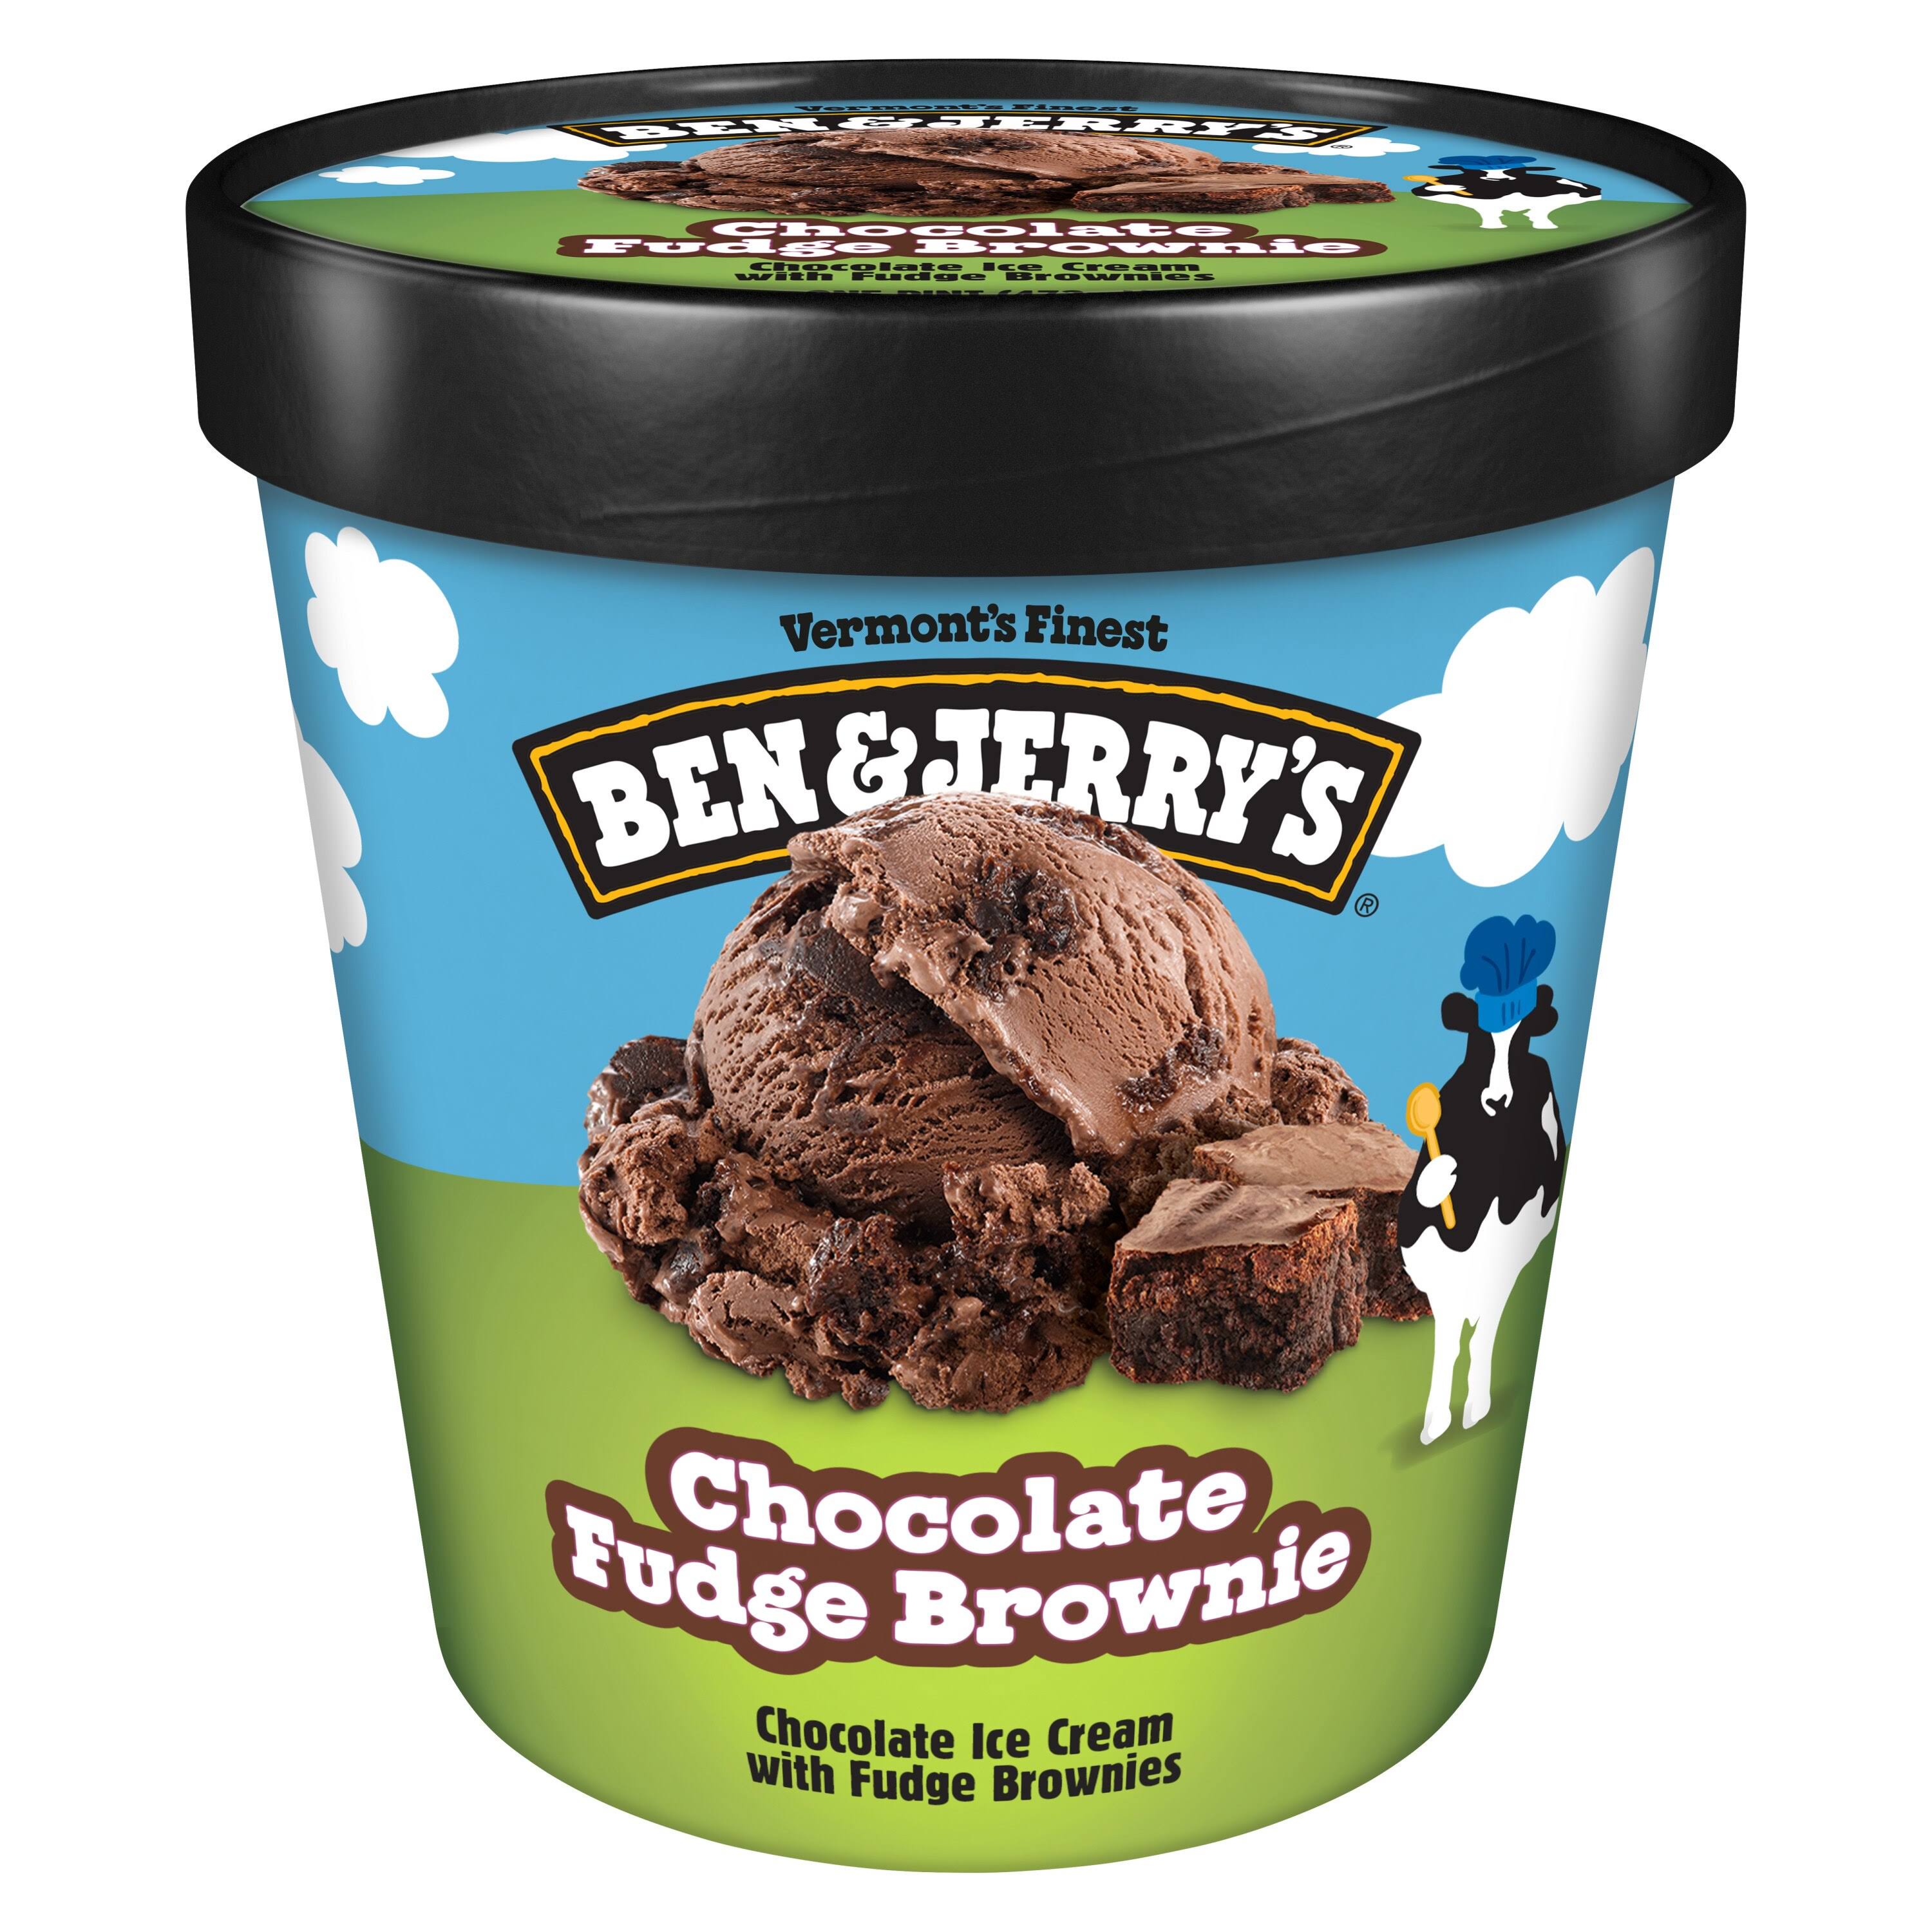 Ben and Jerry's Ice Cream - Chocolate Fudge Brownie, 16oz